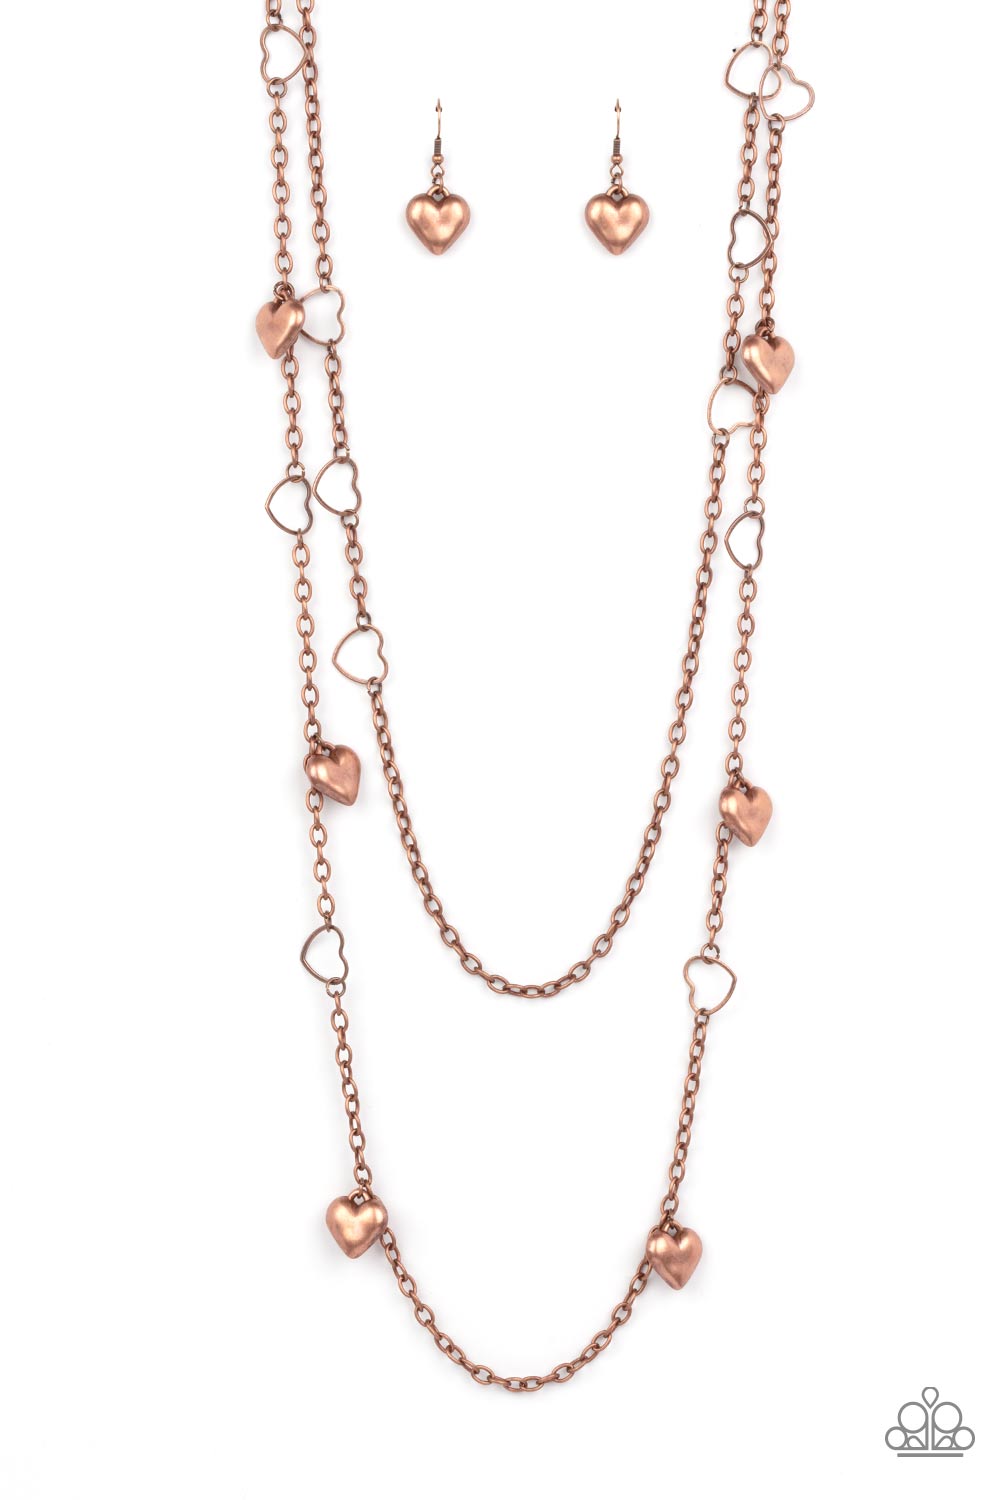 Chicly Cupid - Copper (Heart) Necklace freeshipping - JewLz4u Gemstone Gallery